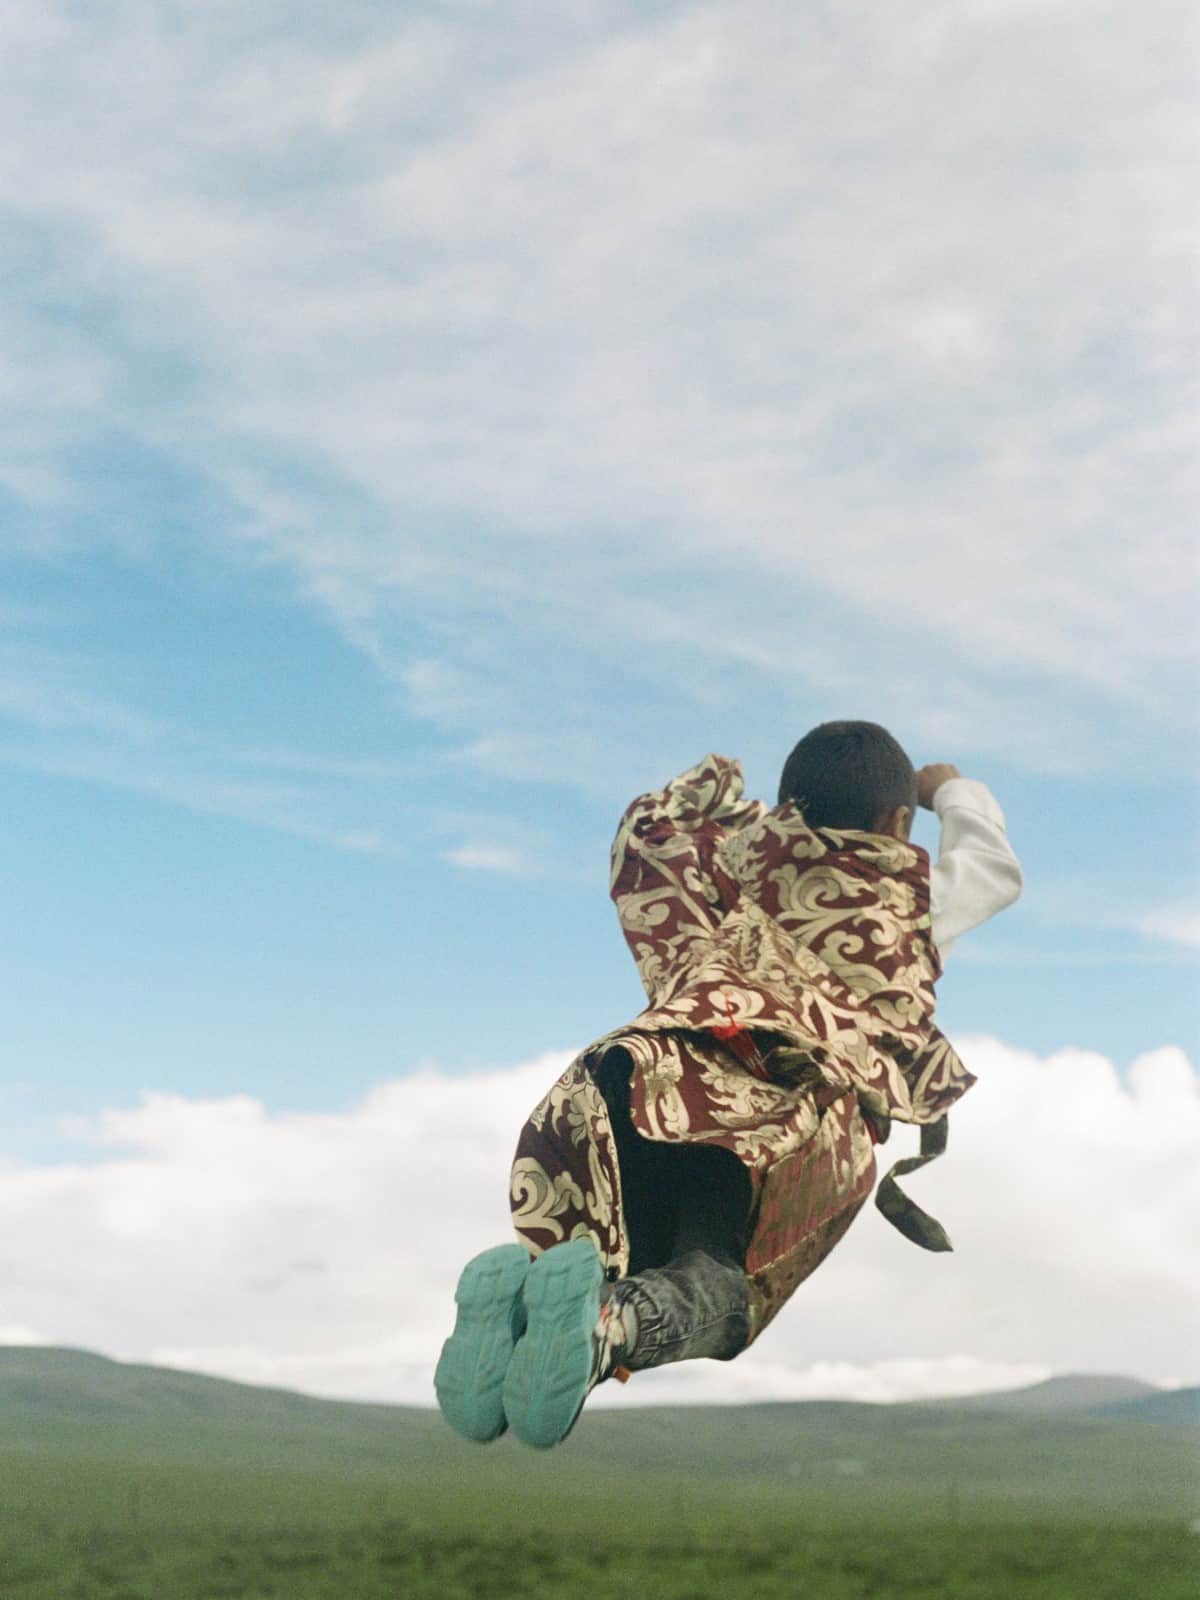 Tibetan girl jumping in the air